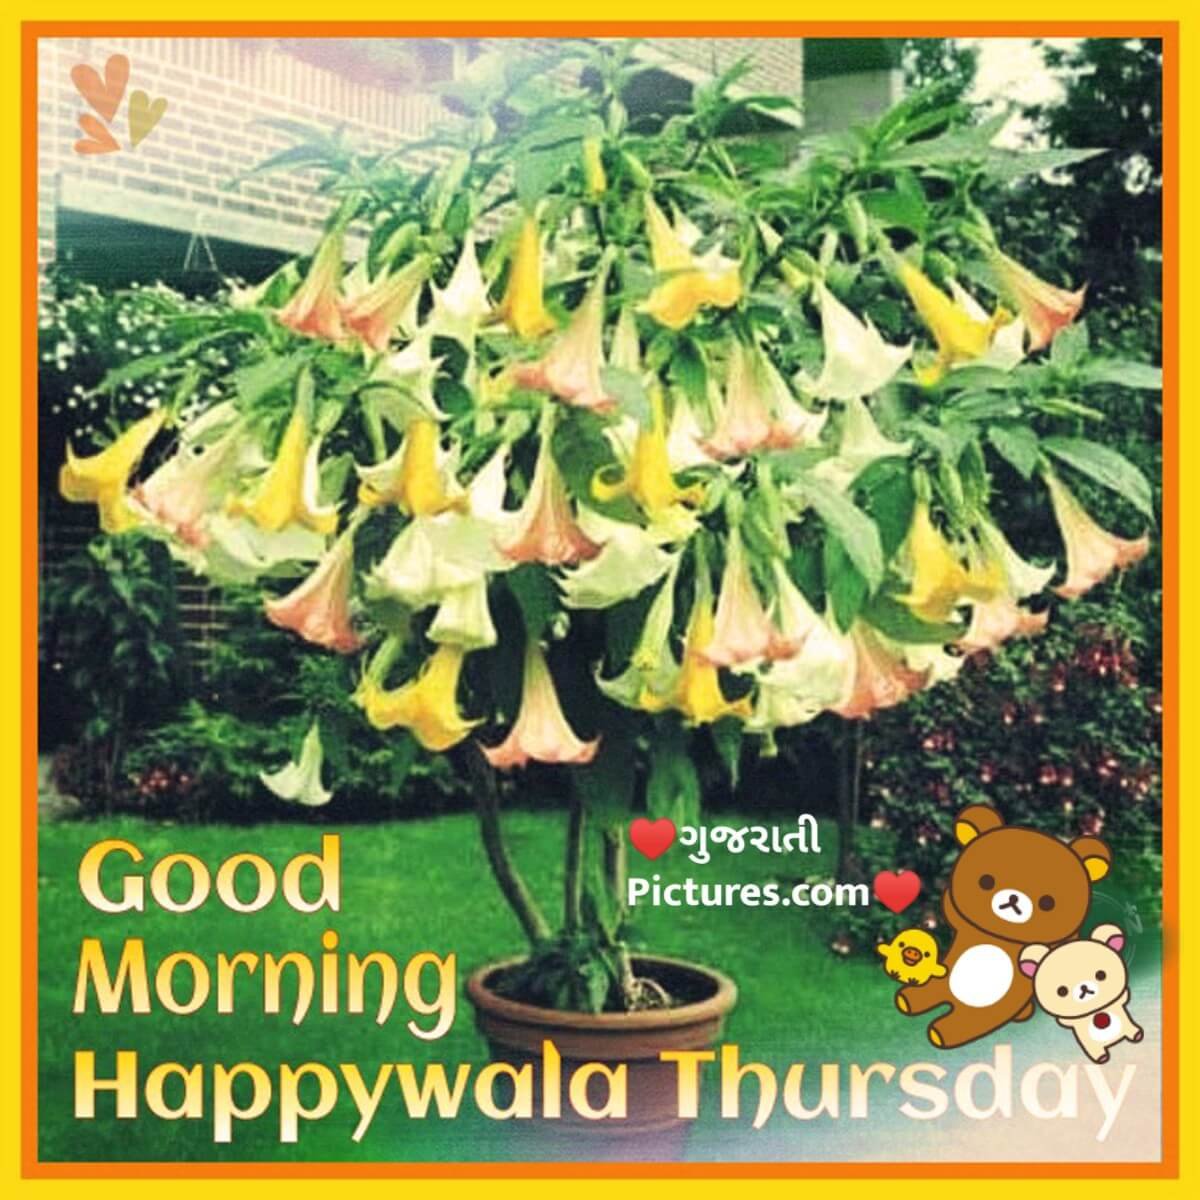 Happywala Thursday